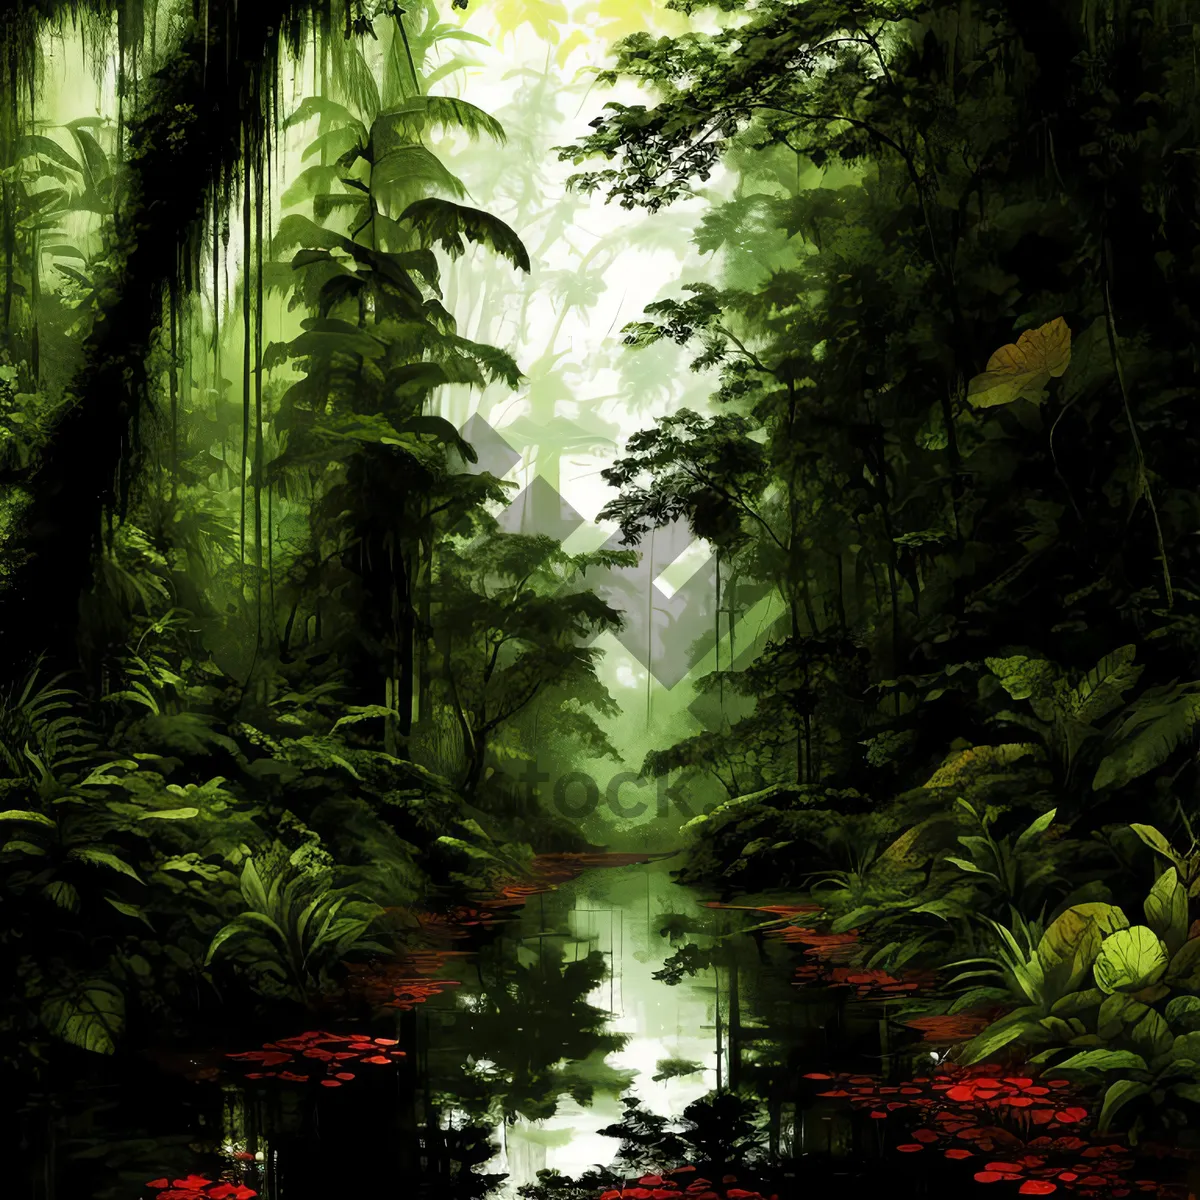 Picture of Wild Jungle Ferns in Lush Rainforest